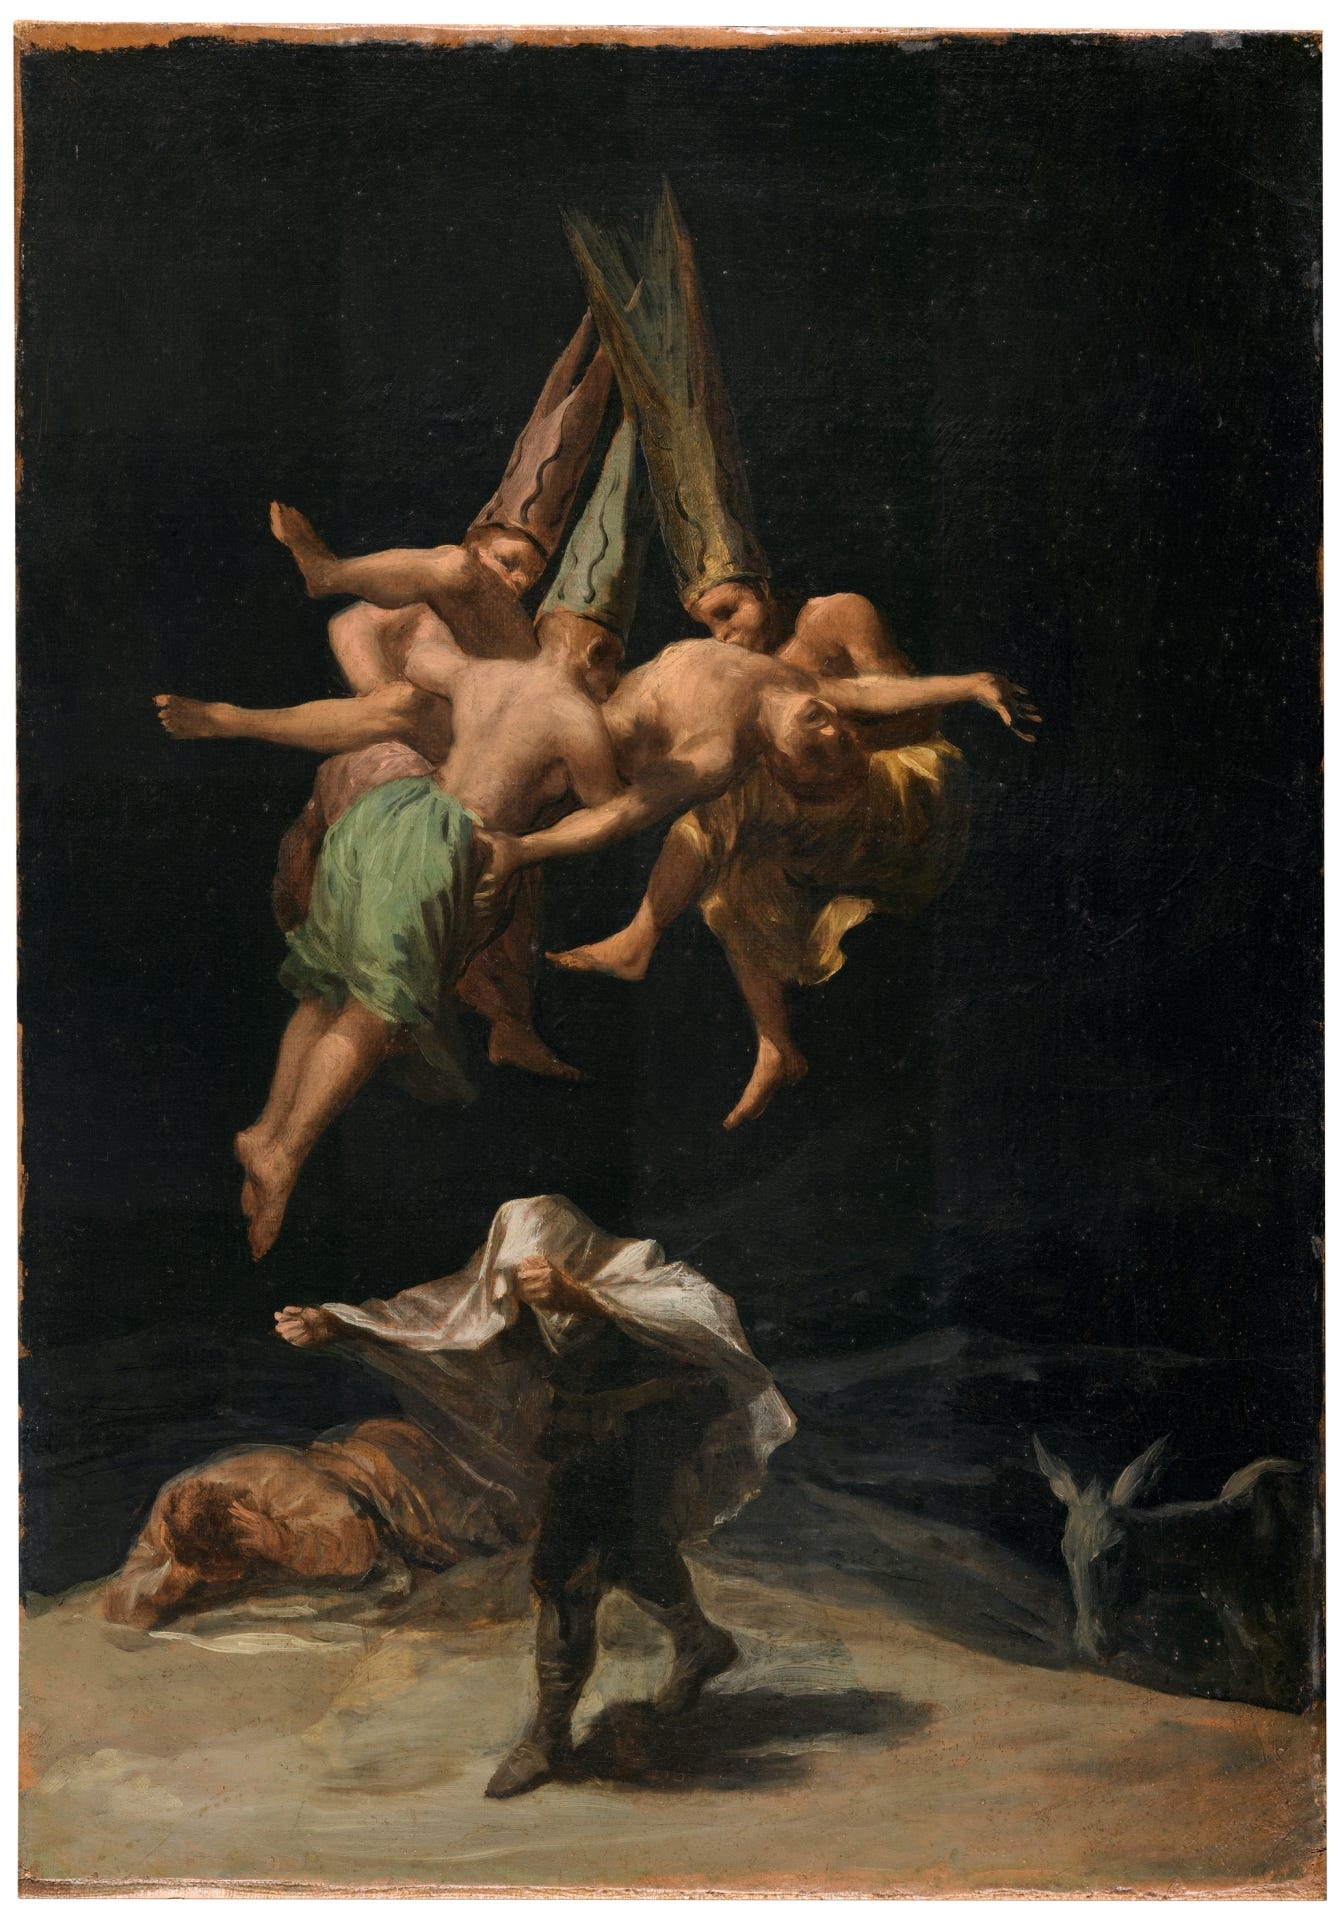 Spooky Art: Witches' Flight by Francisco Goya | Maria Cristina | Medium